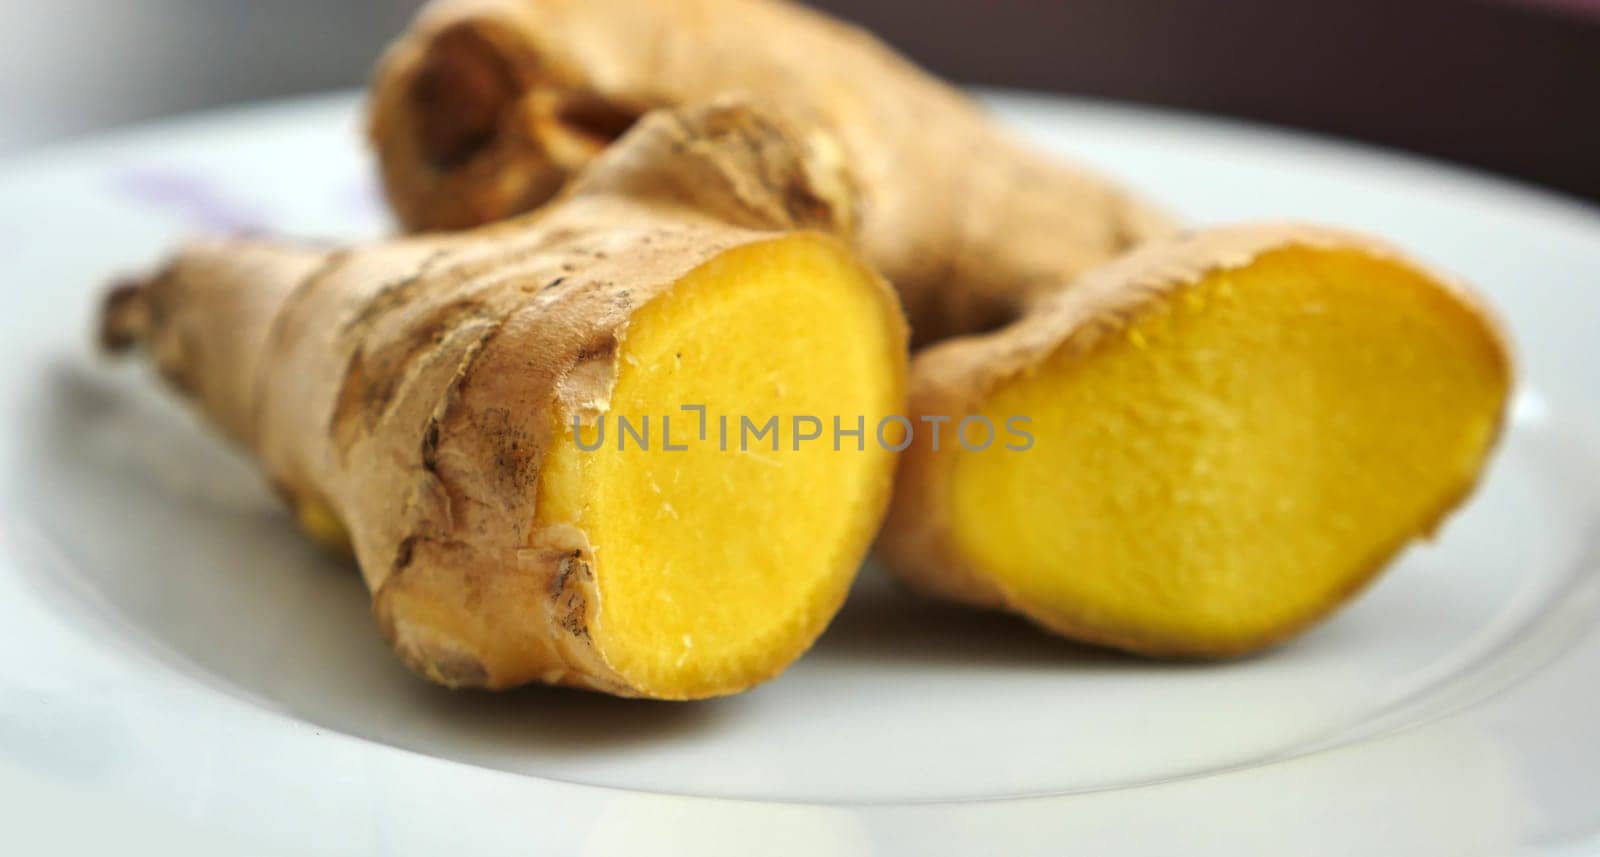 natural antibiotic fresh ginger tuber, by nhatipoglu